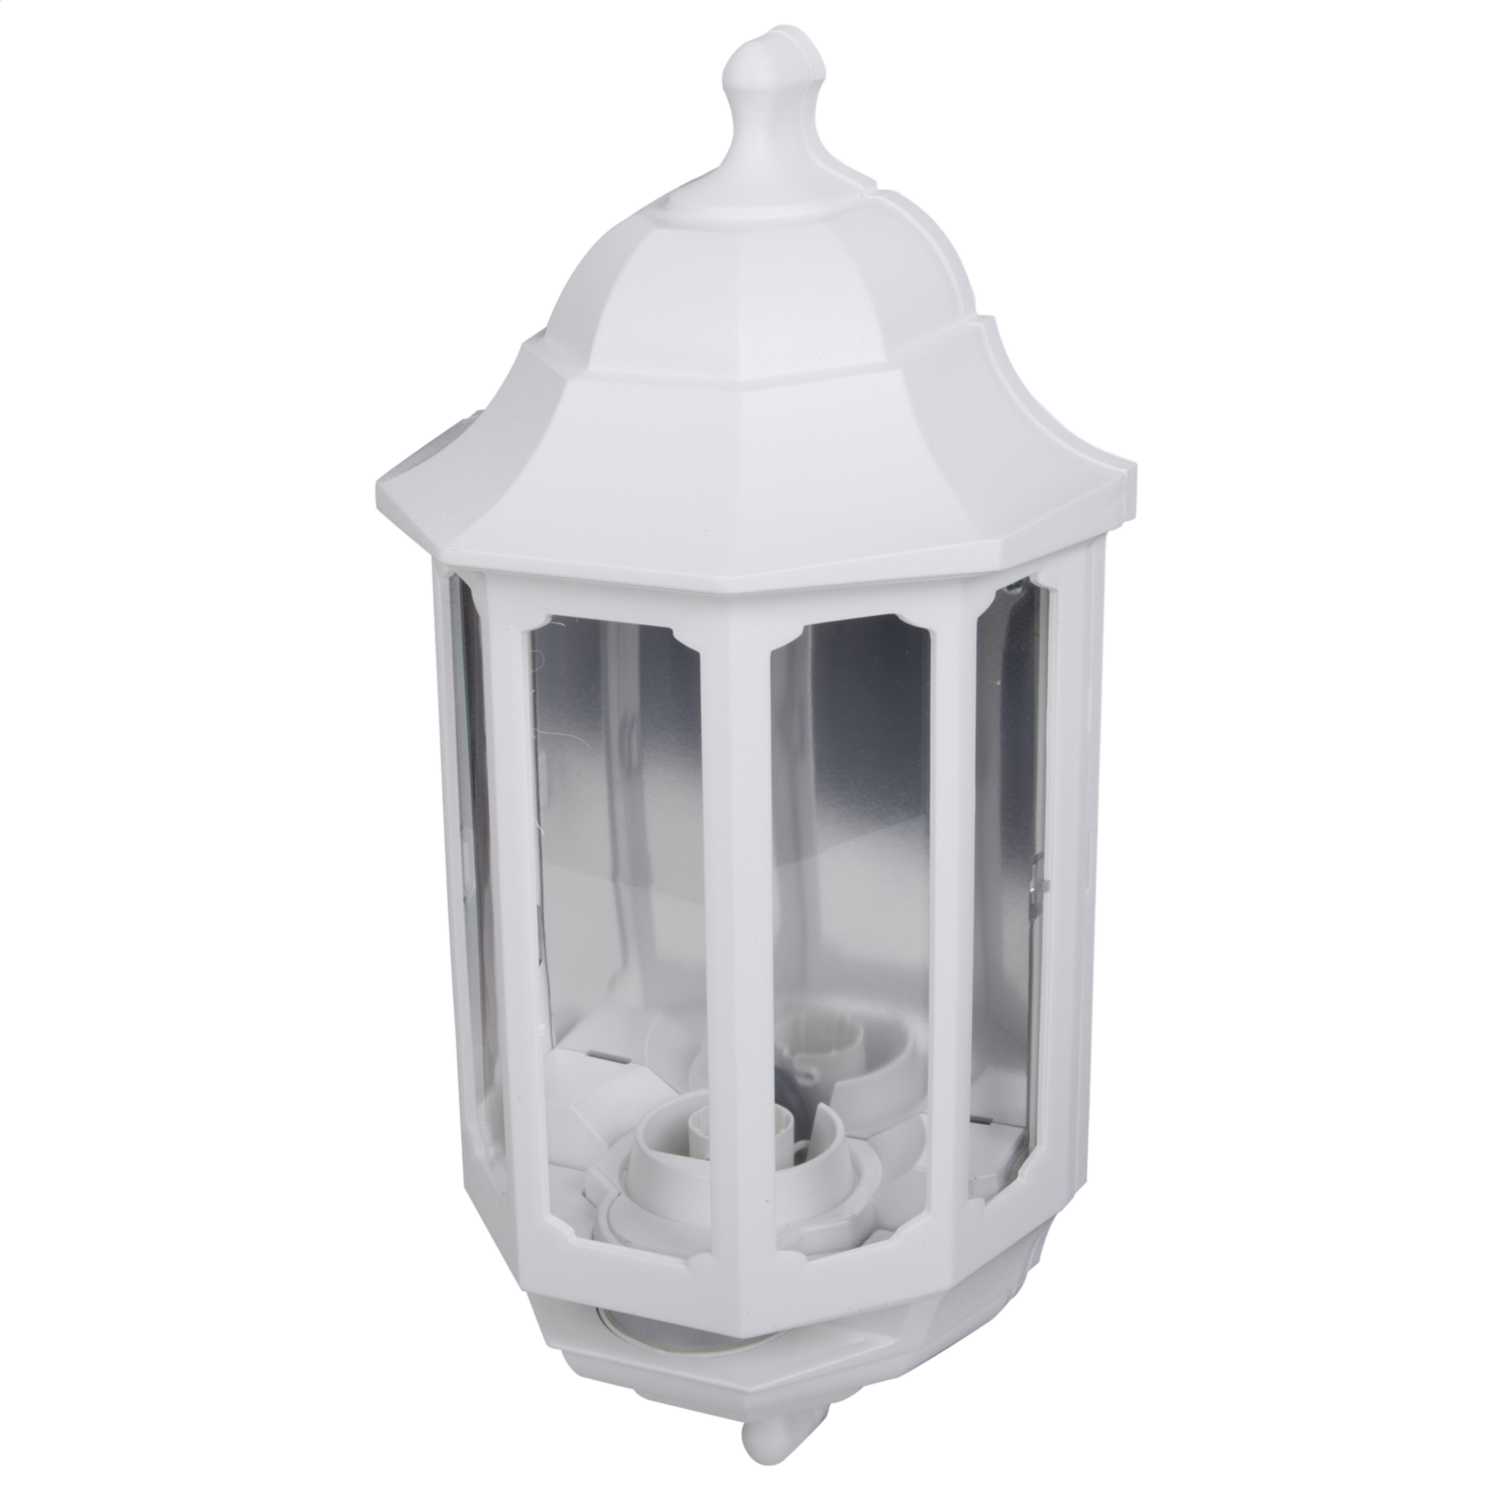 4 x ASD HL/WK060P Half Lantern Wall Light Fittings with PIR Sensor White 